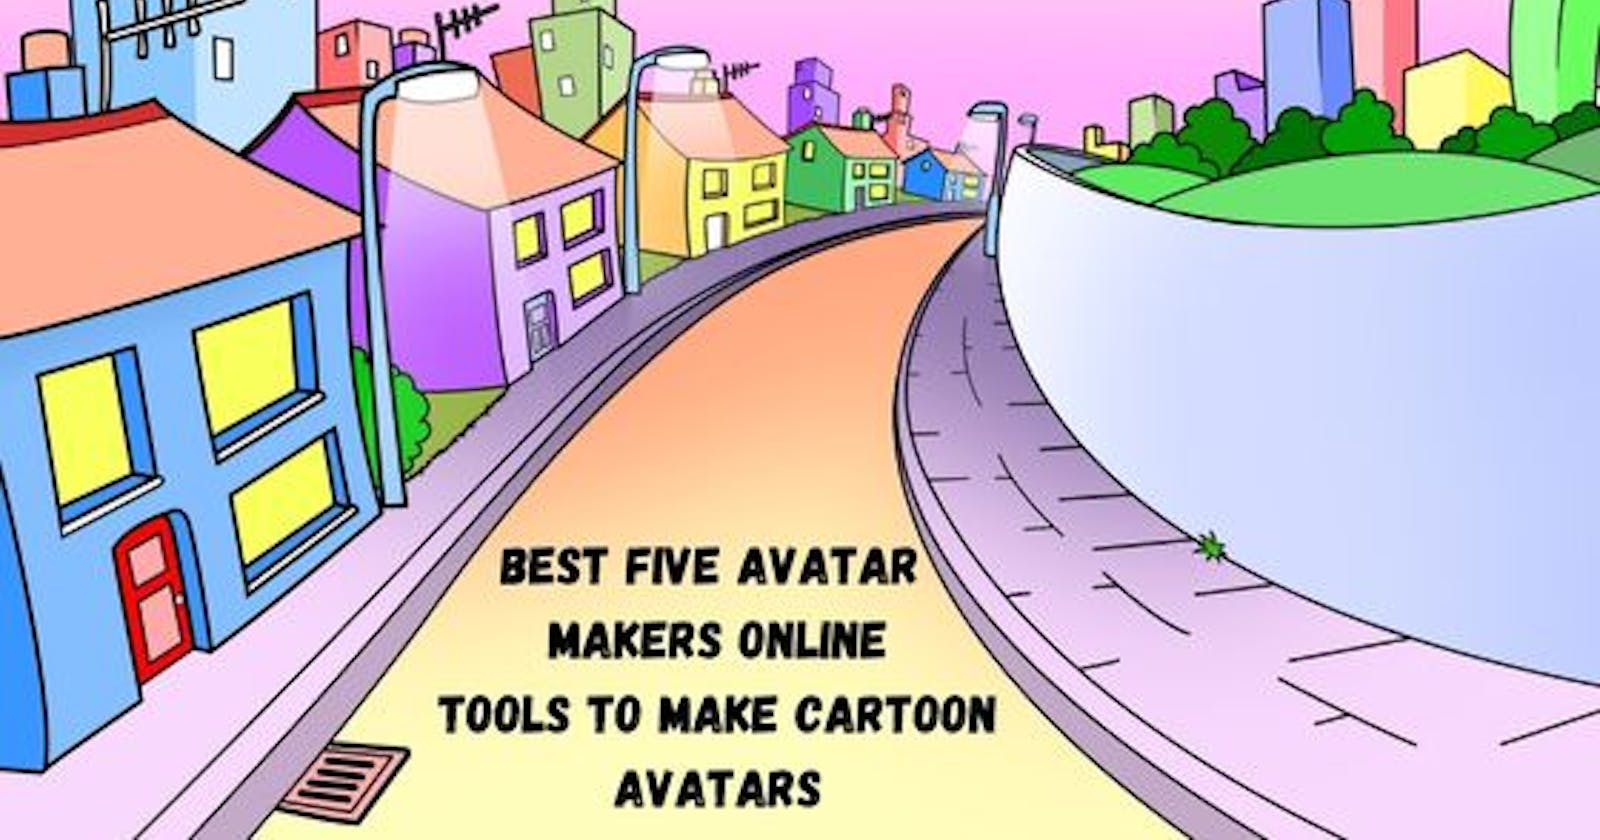 Best Five Avatar makers online tools to make cartoon Avatars